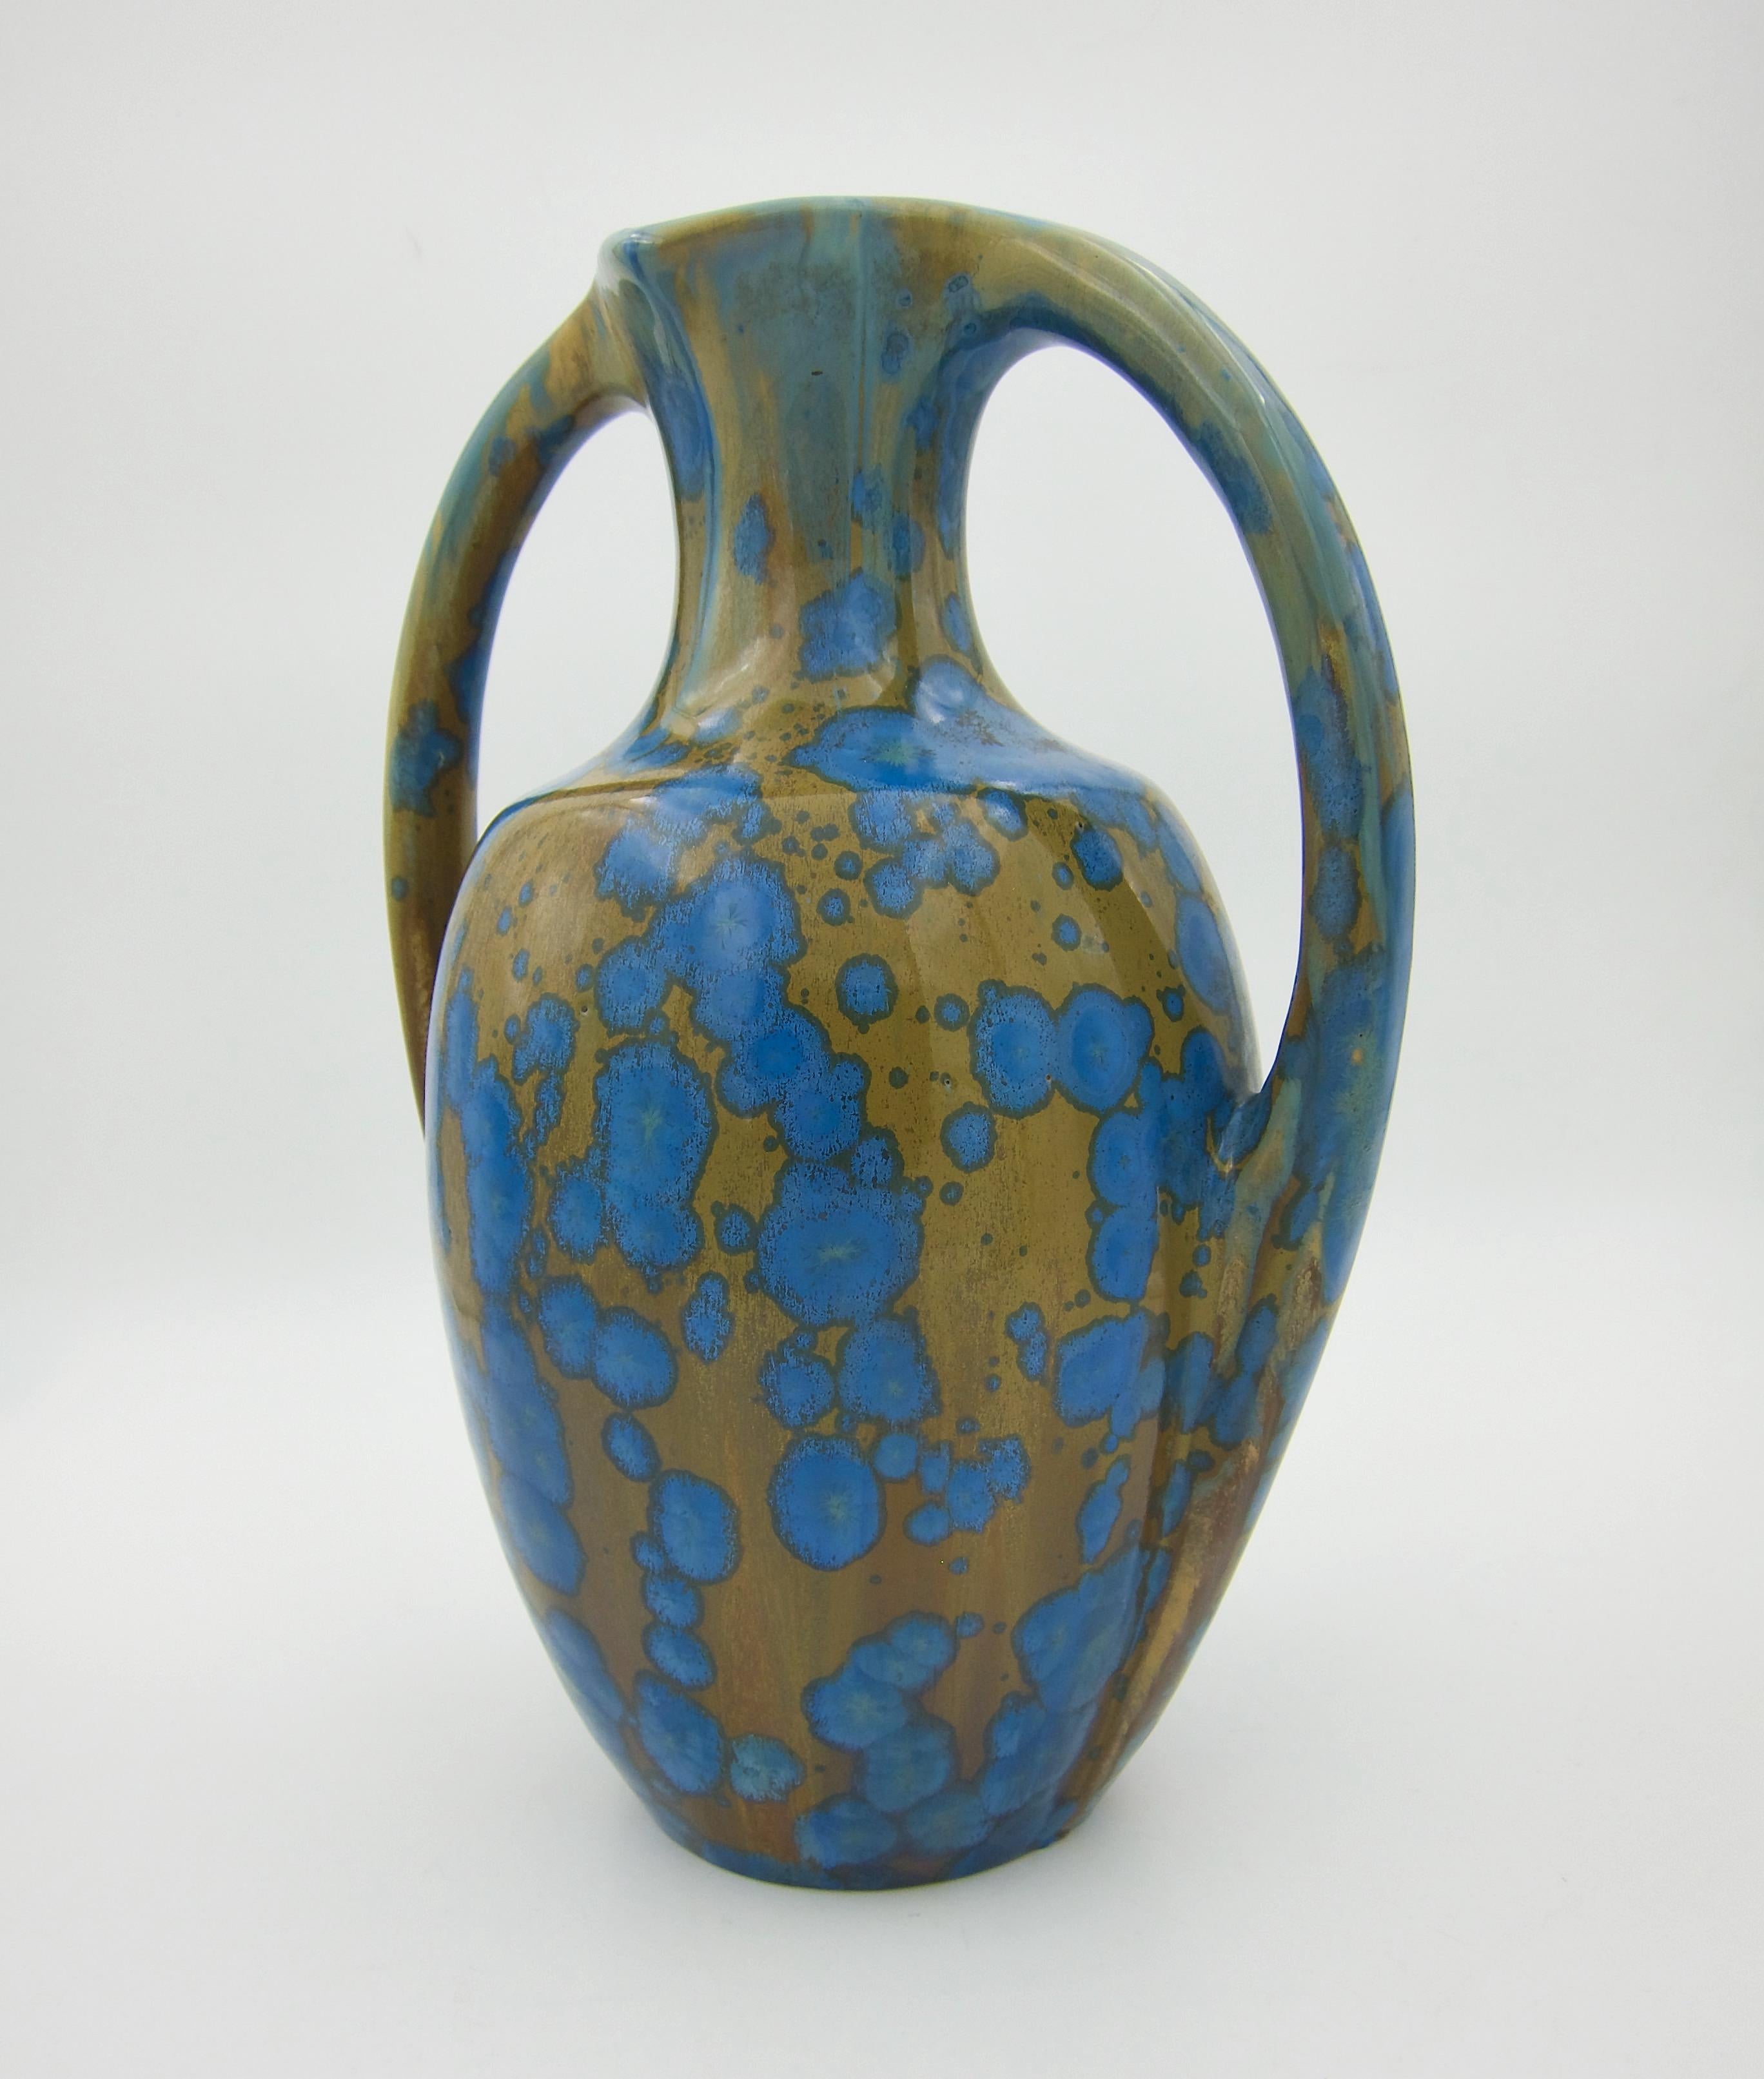 Glazed French Pierrefonds Art Pottery Vase with Blue Crystalline Glaze